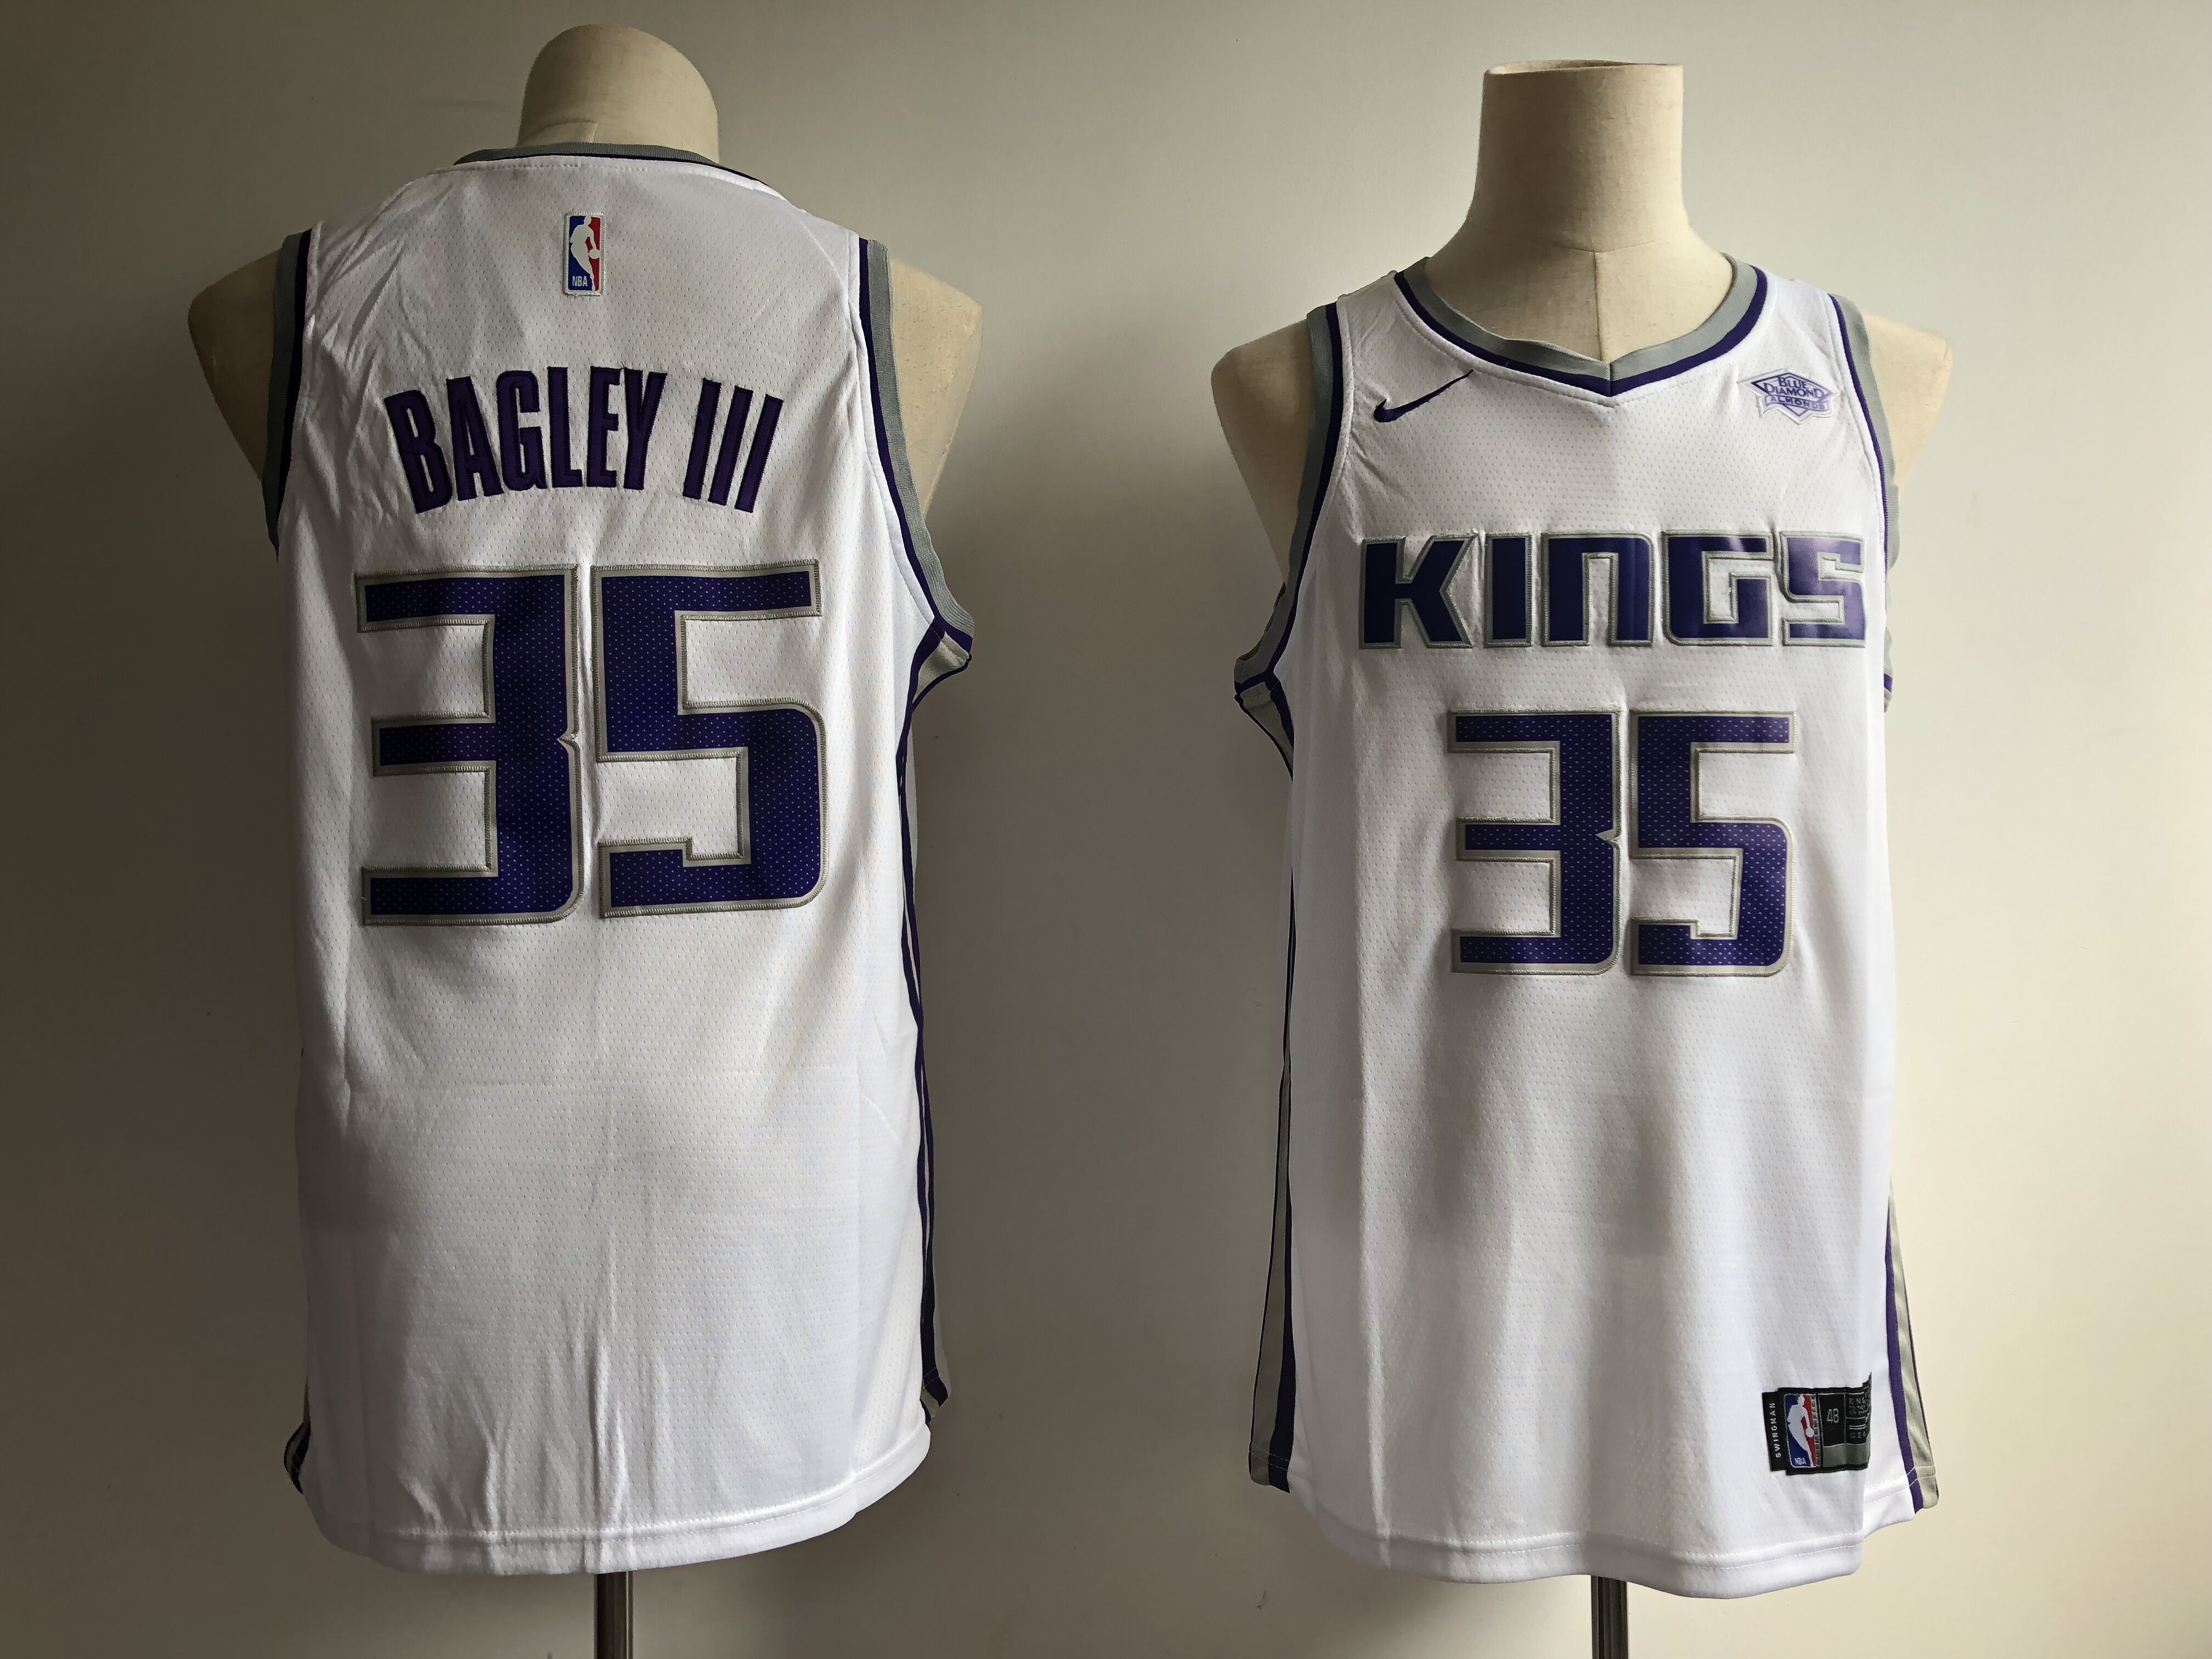 Men Sacramento Kings #35 Bagley III white Game Nike NBA Jerseys